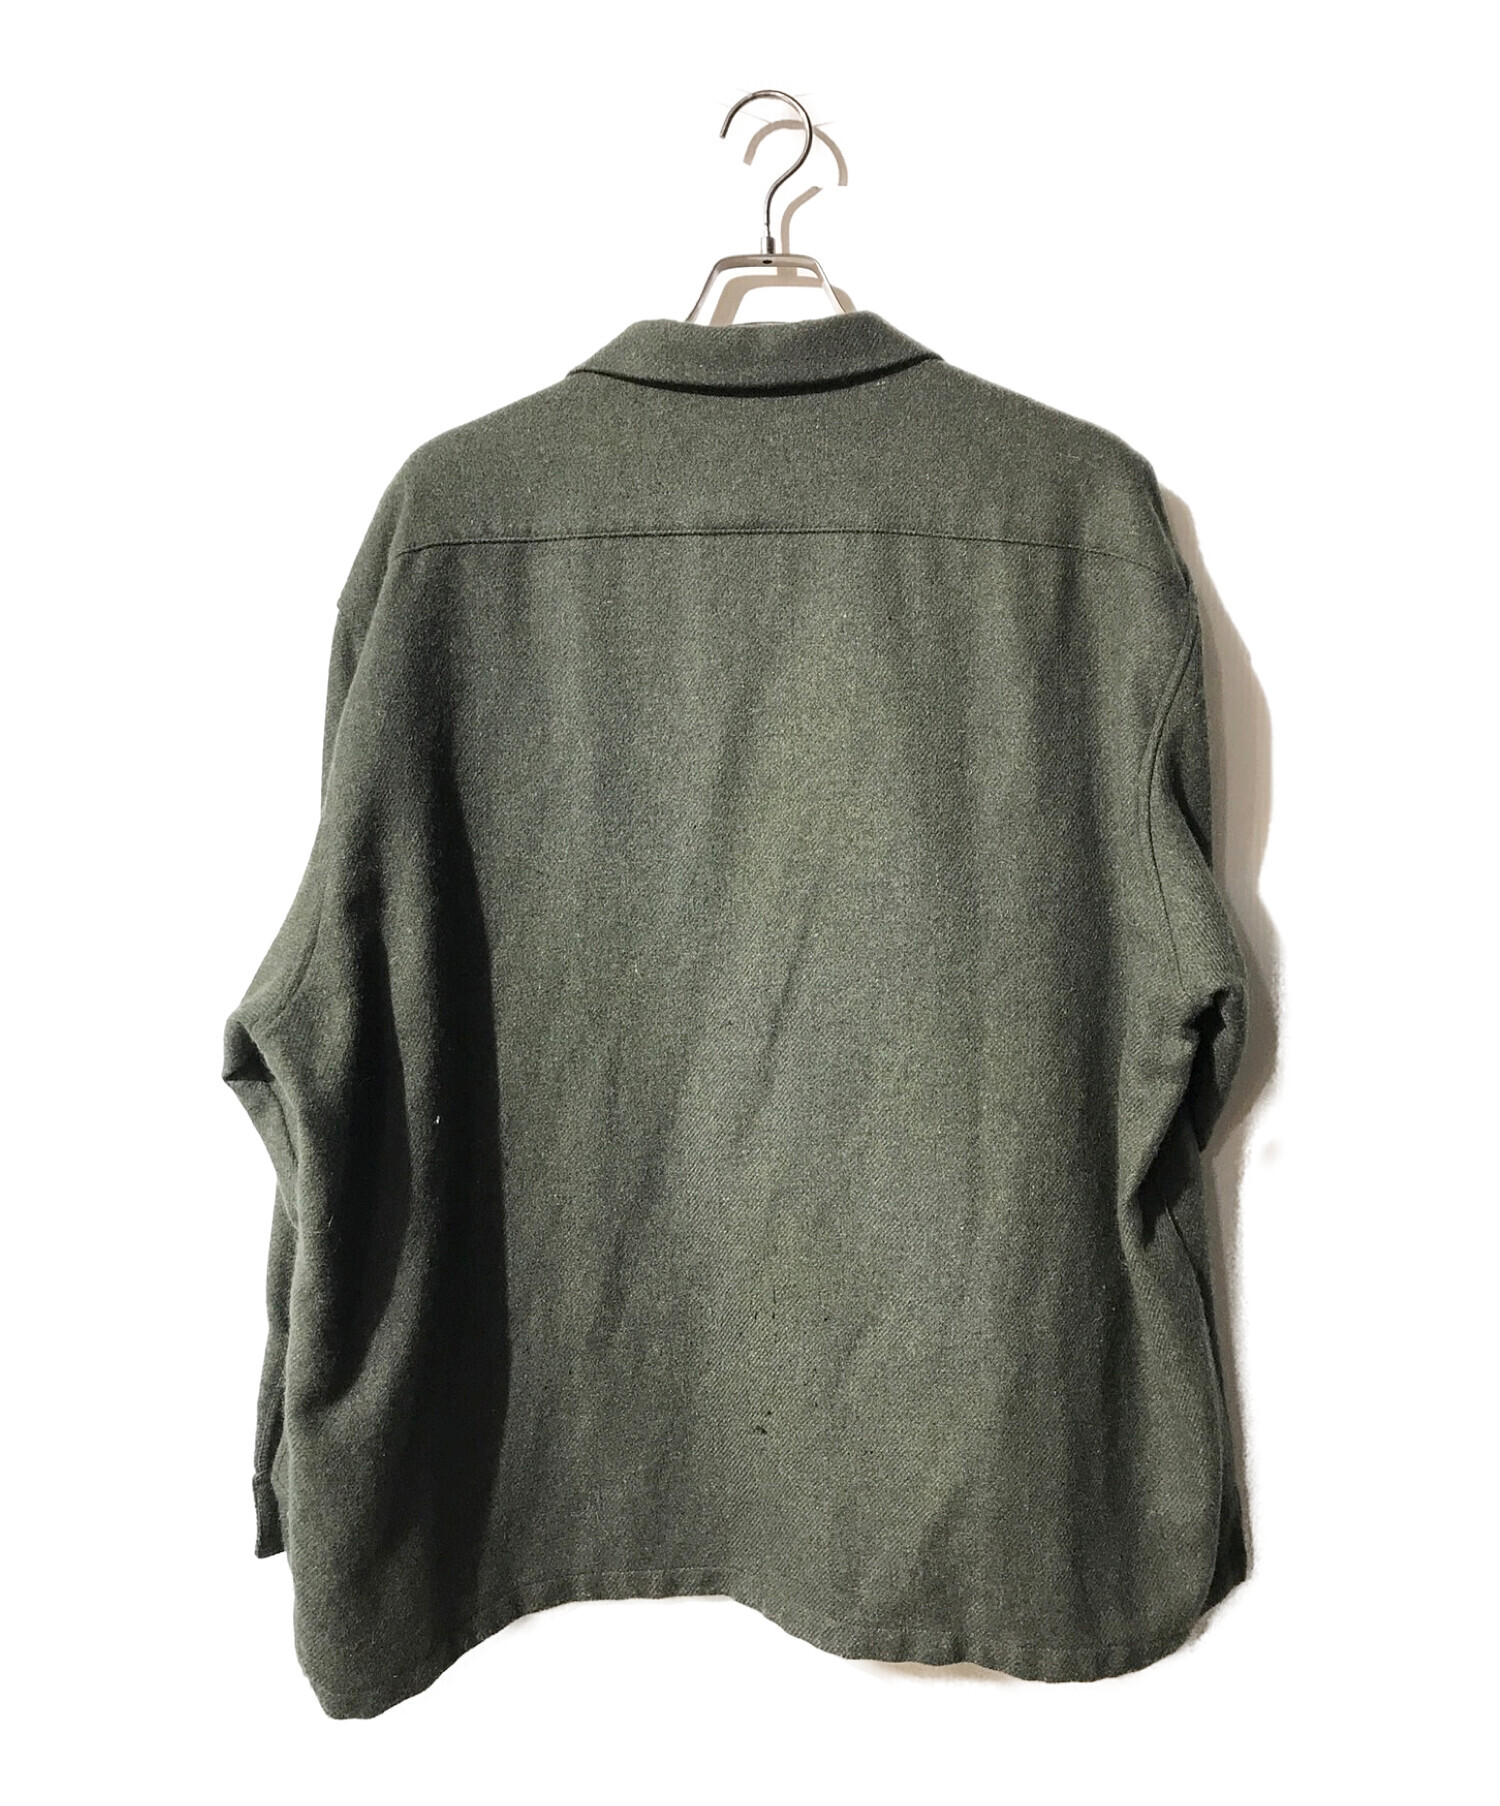 Yuan (ユアン) ウールオープンカラーシャツ オリーブ サイズ:XL